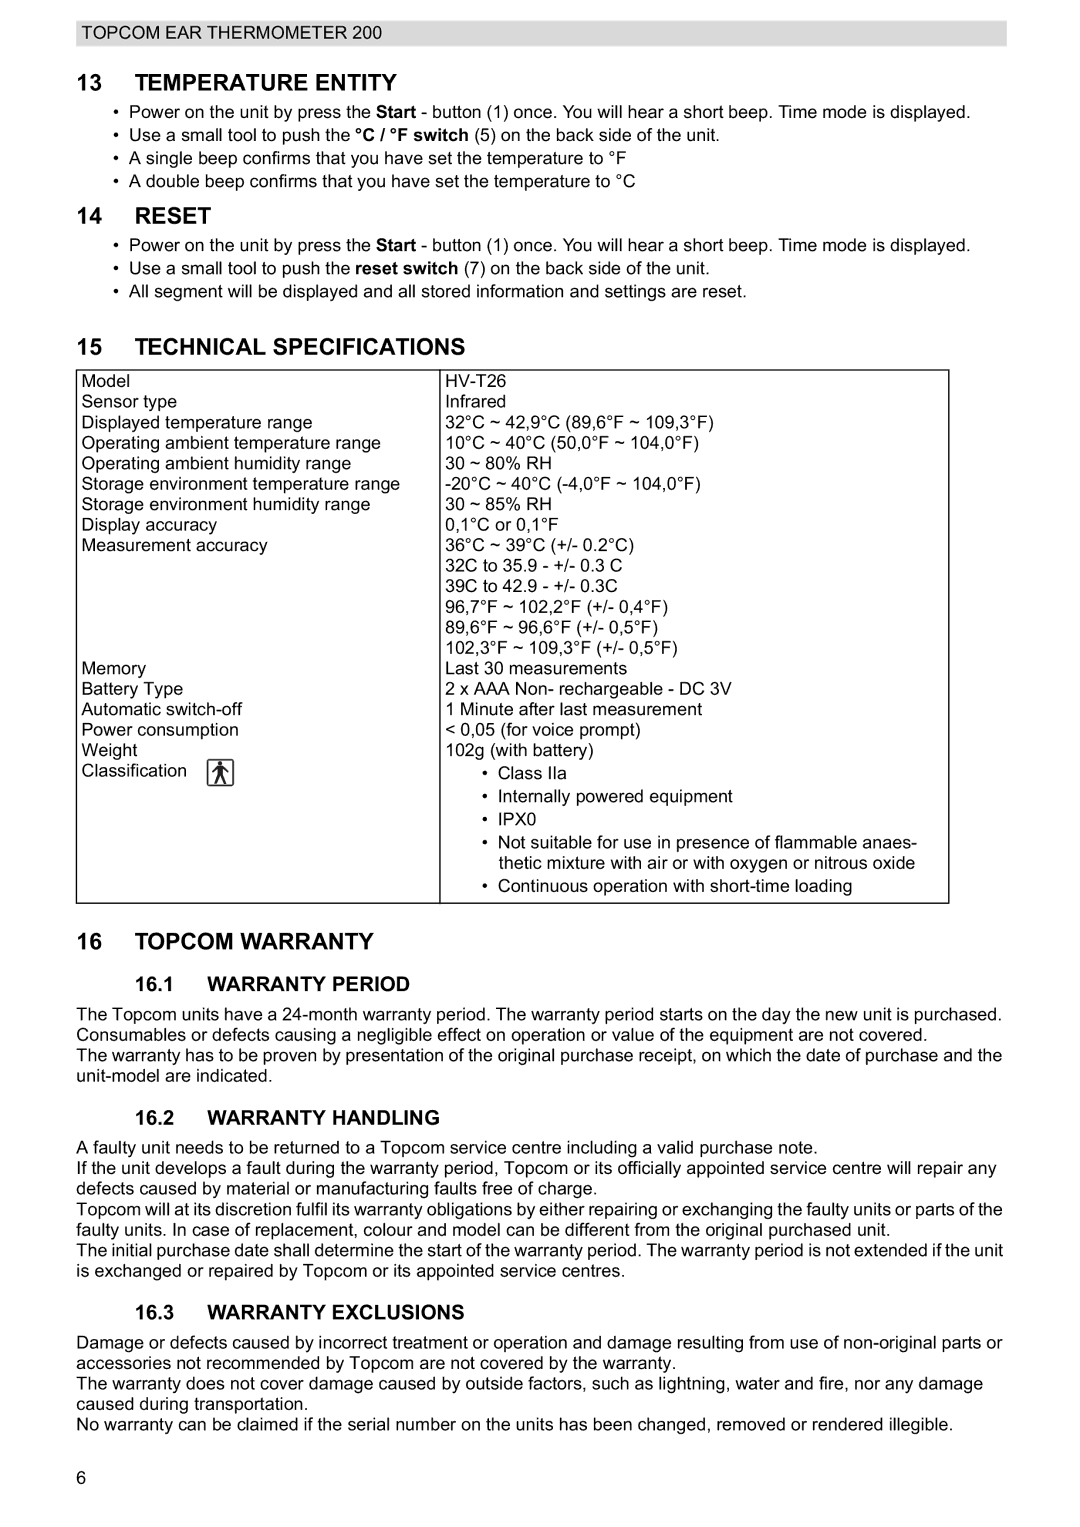 Topcom 200 manual do utilizador Temperature Entity, Reset, Technical Specifications, Topcom Warranty 